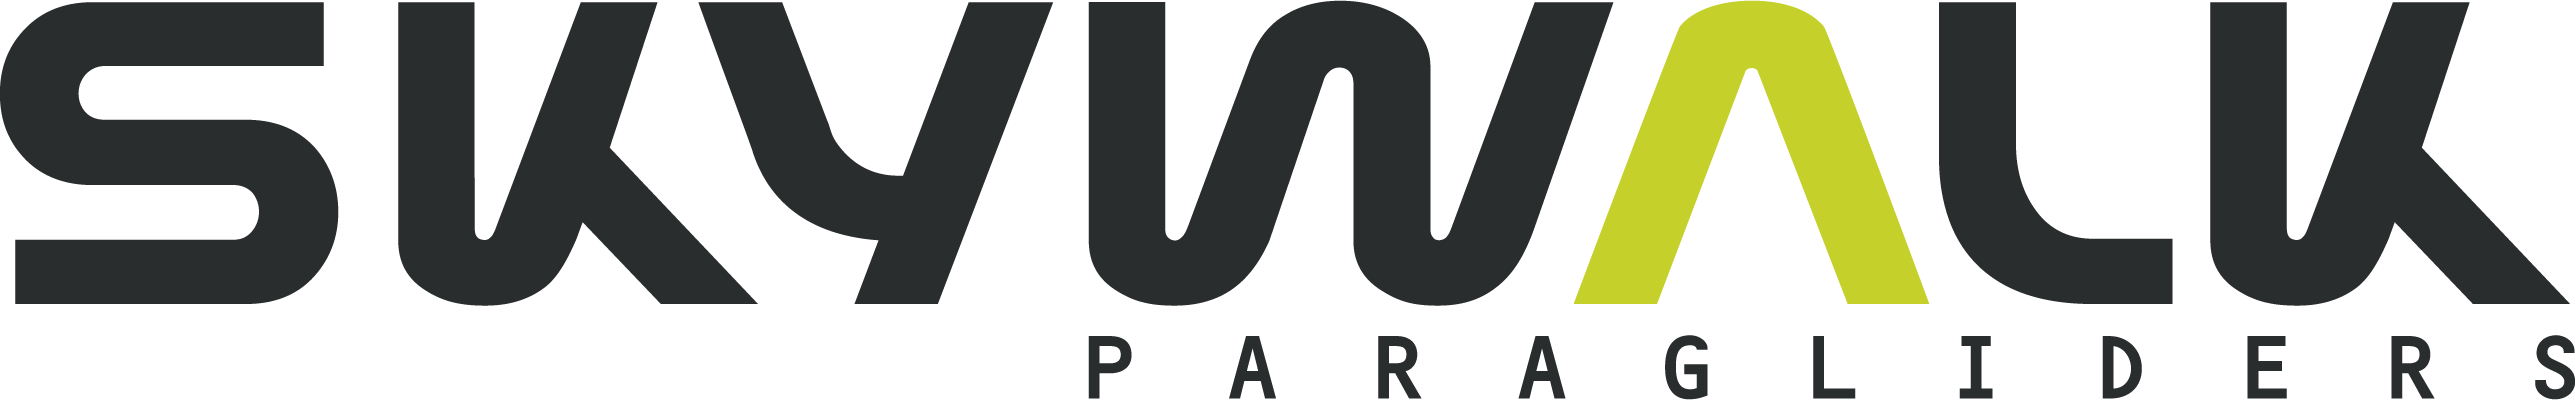 Skywalk-Paragliders-Logo.png